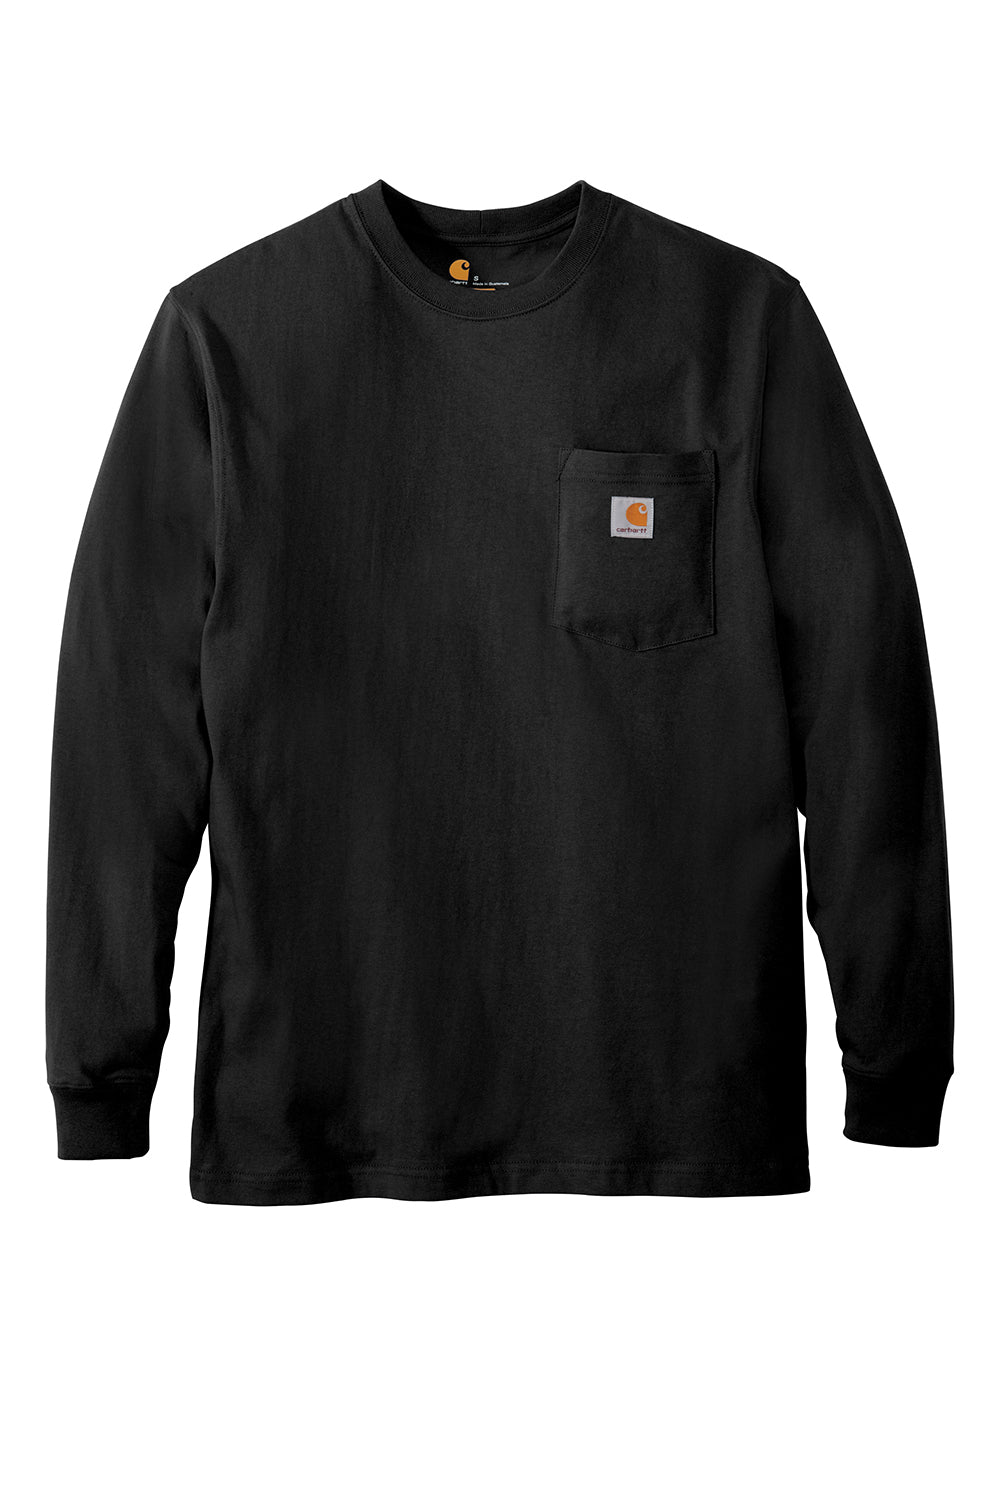 Carhartt CTK126 Mens Workwear Long Sleeve Crewneck T-Shirt w/ Pocket Black Flat Front